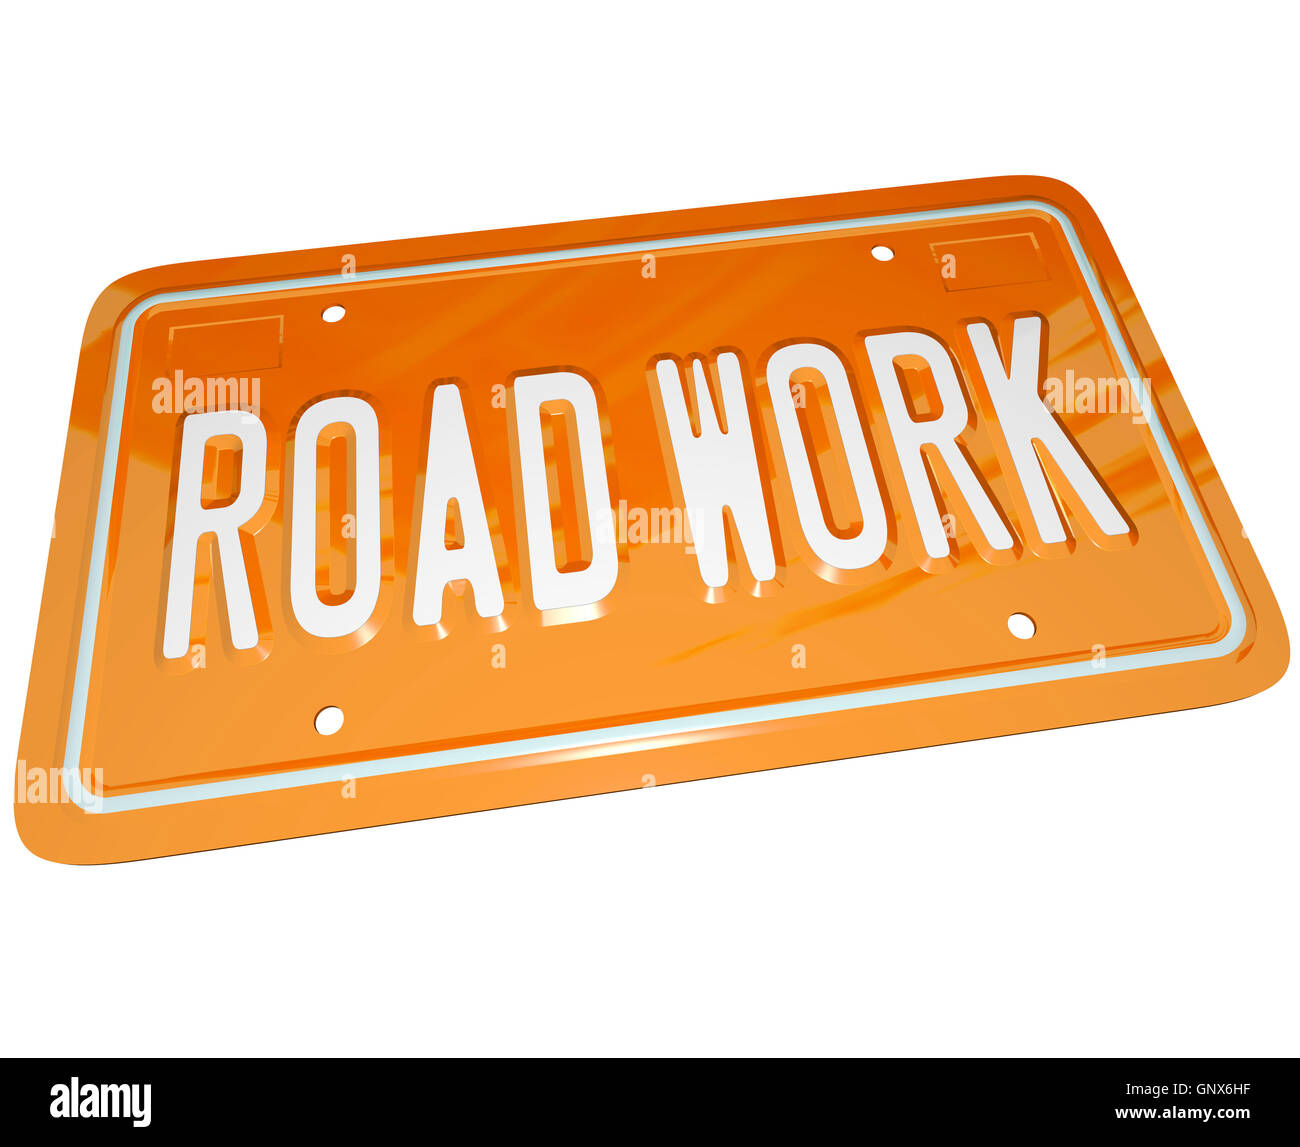 Road Work Orange Automobile License Plate for Car Stock Photo